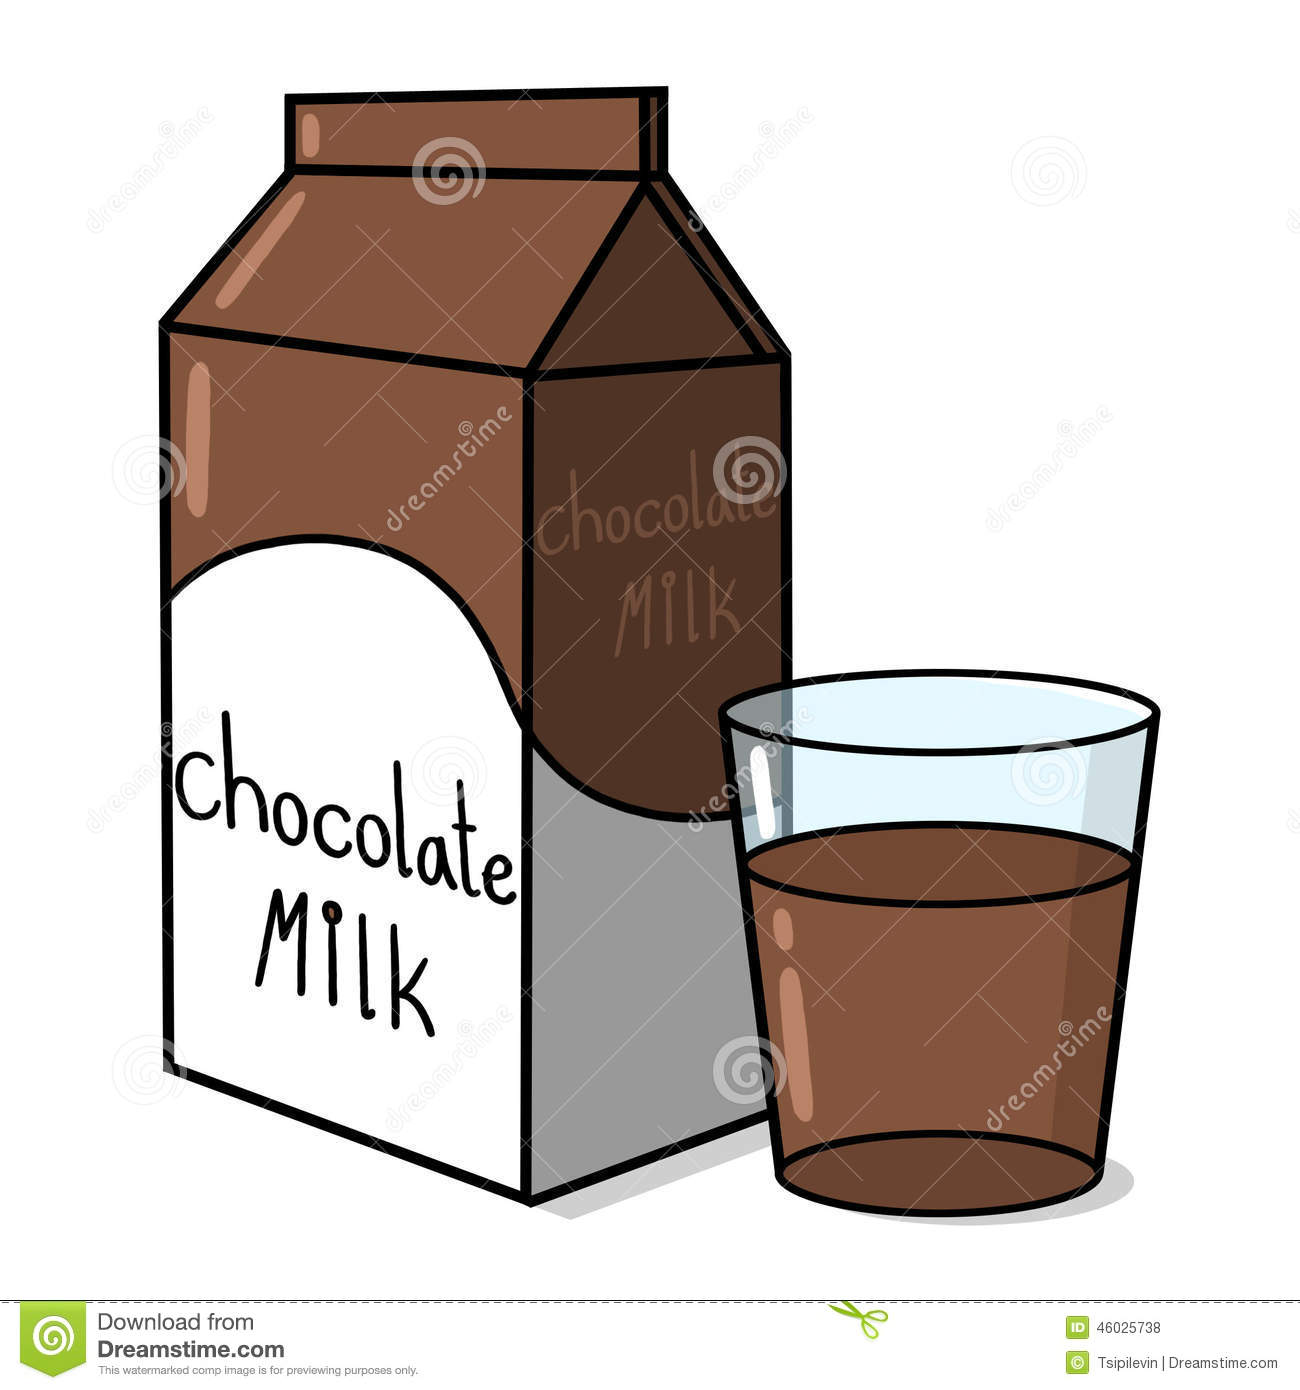 90 chocolate milk.